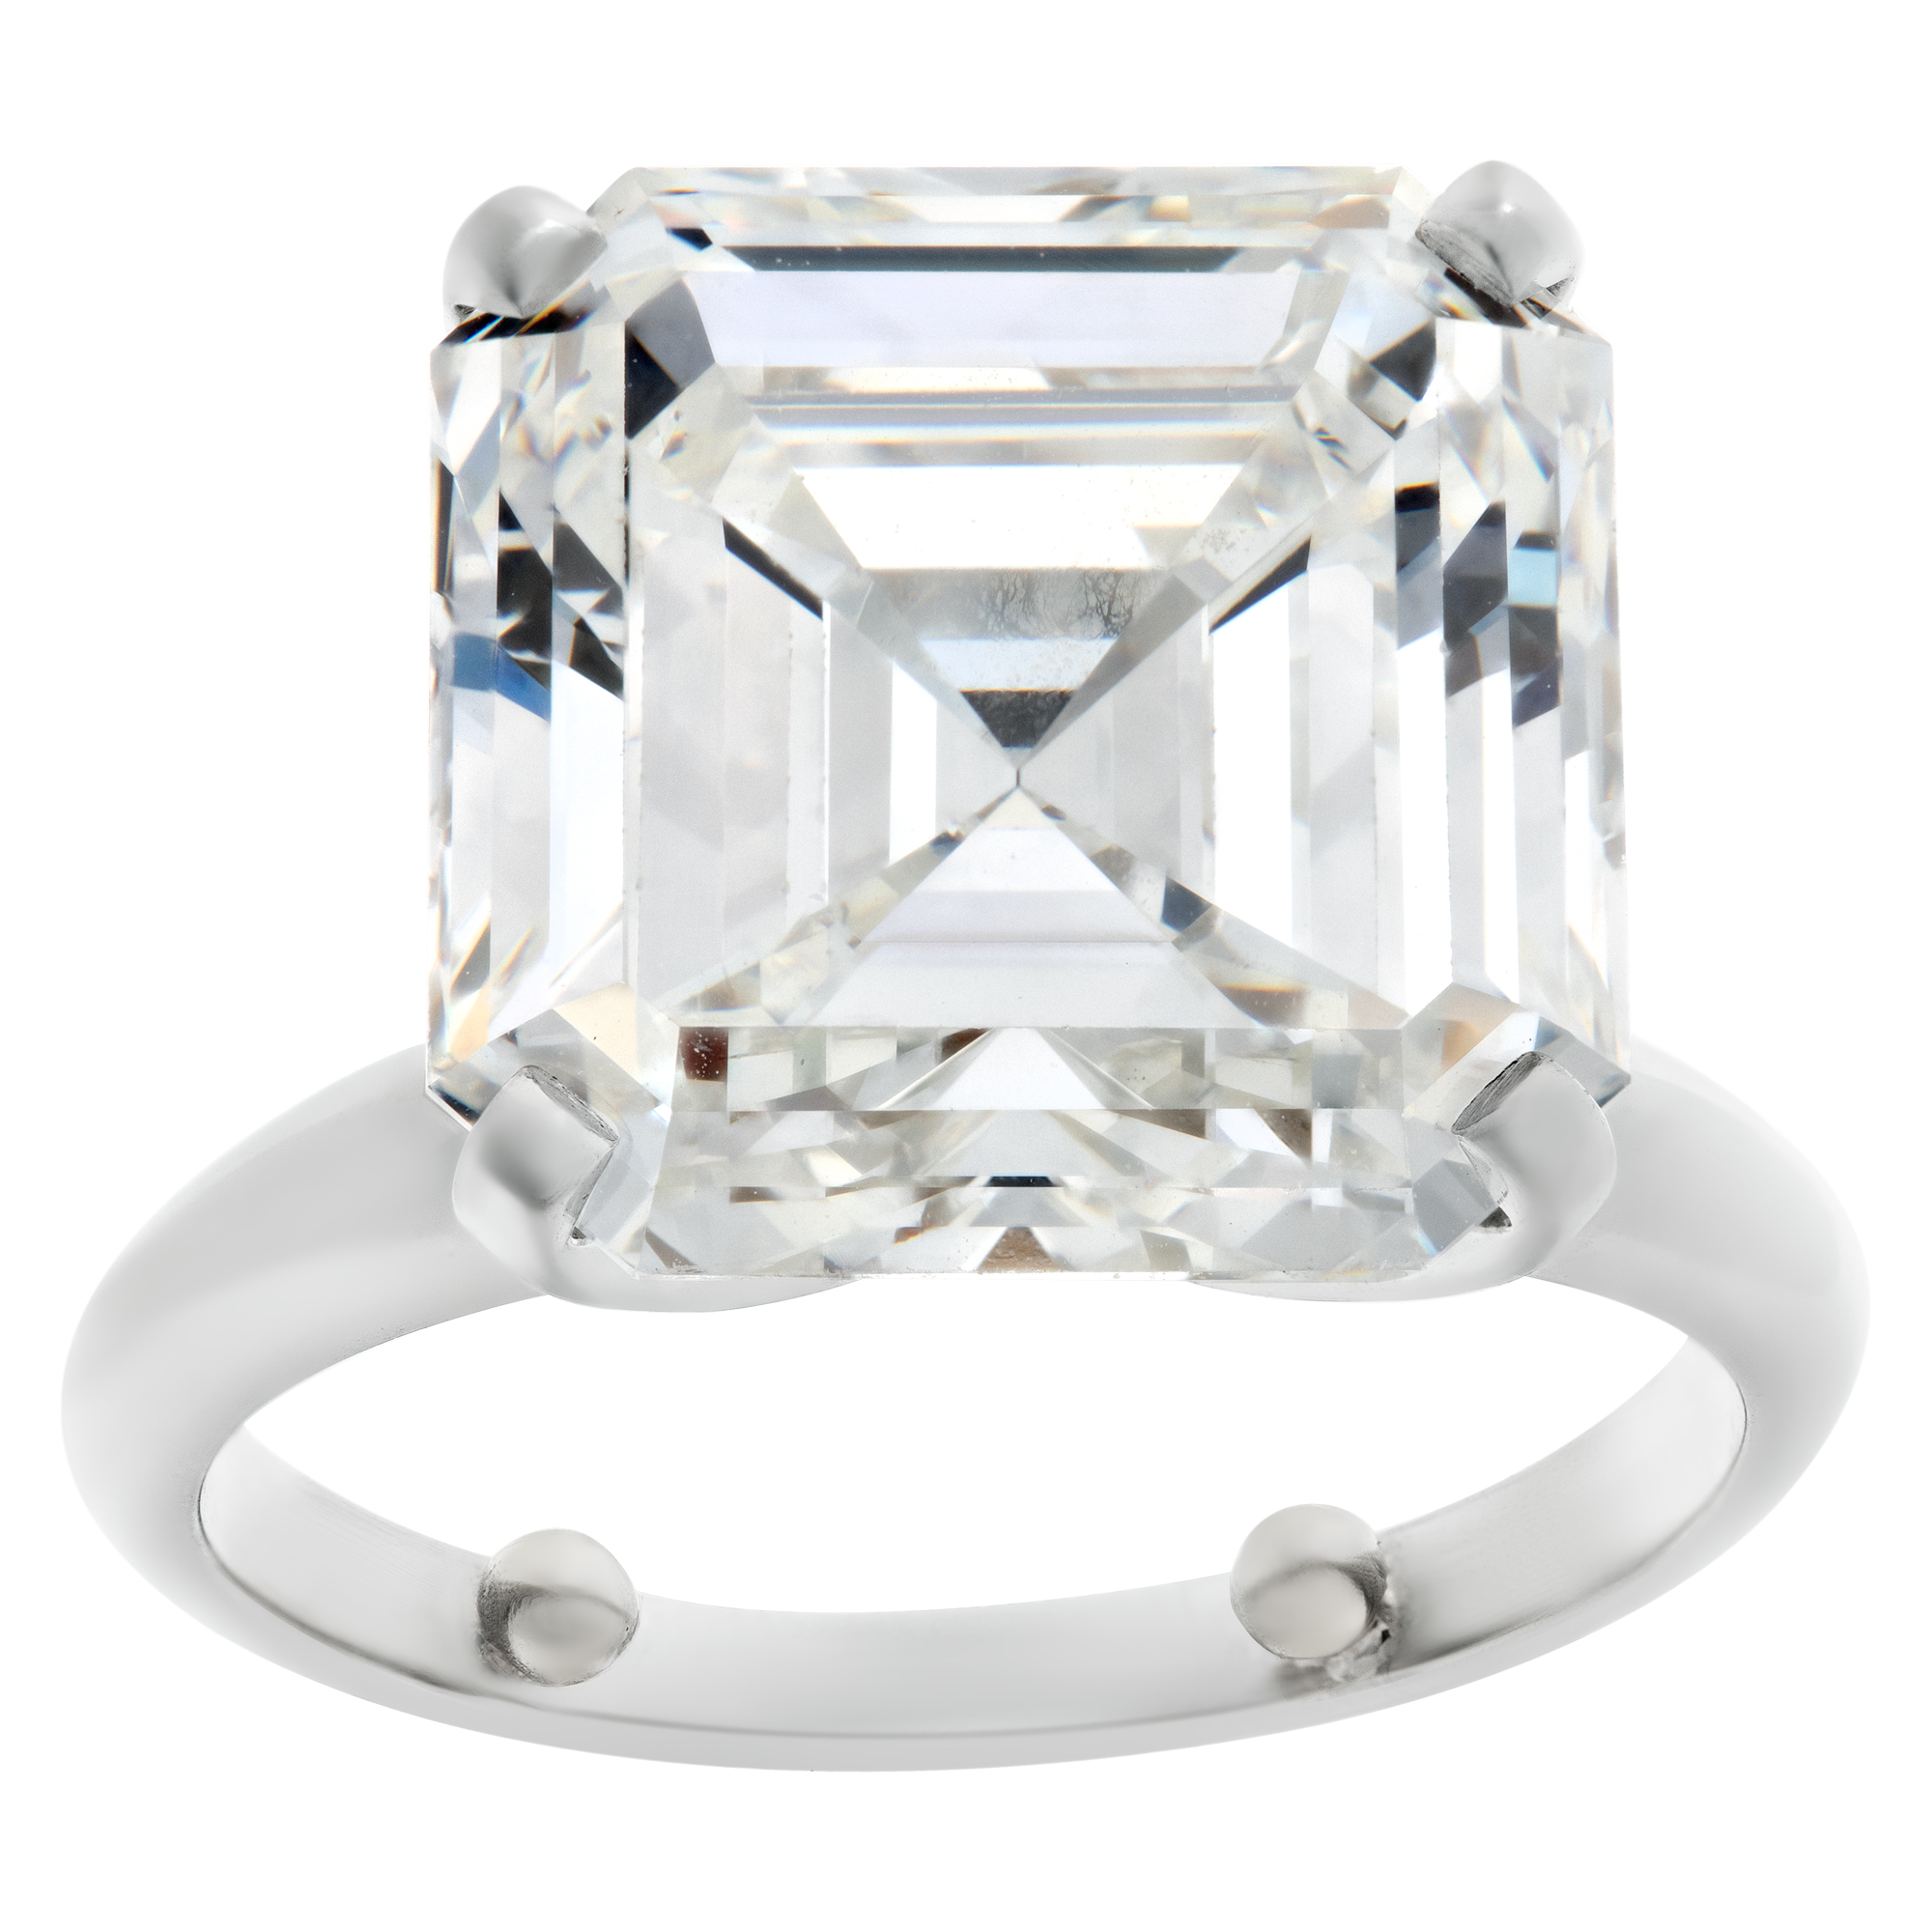 GIA certified asscher cut diamond 9.03 carat (G Color, Vs 1 Clarity) solitaire ring